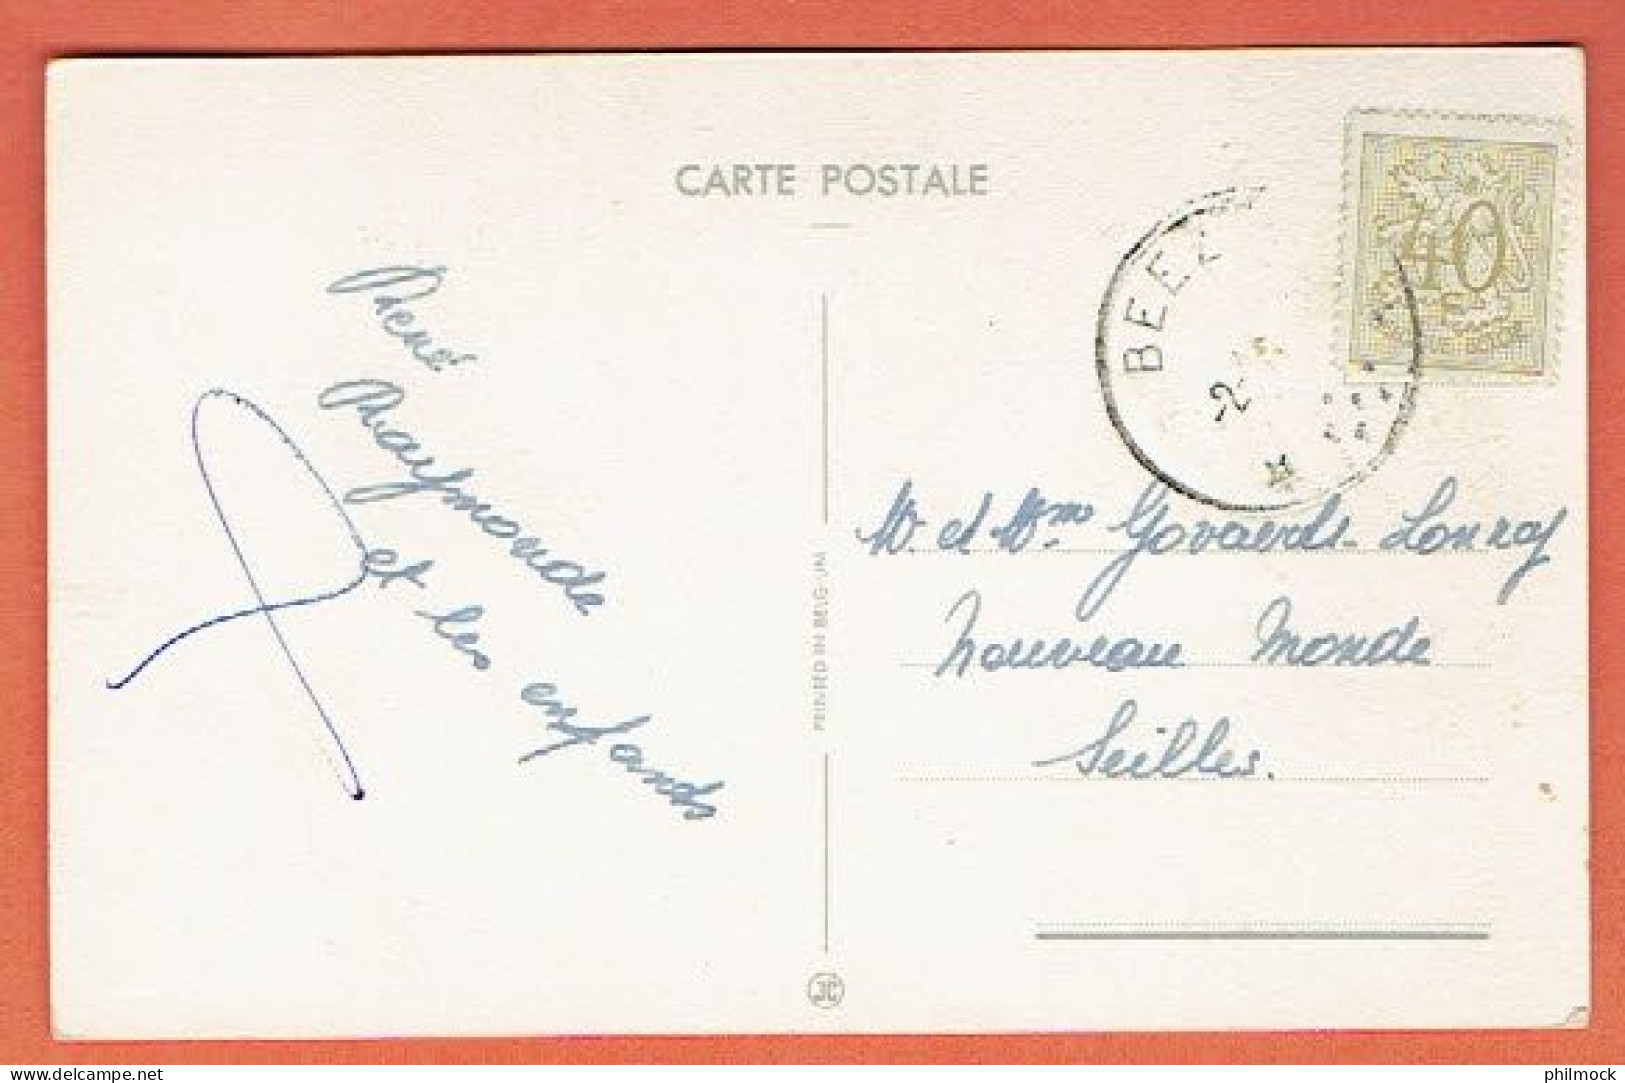 J - Relais - Sterstempel BEEZ Vers Seilles - CP Bonne Année - Postmarks With Stars